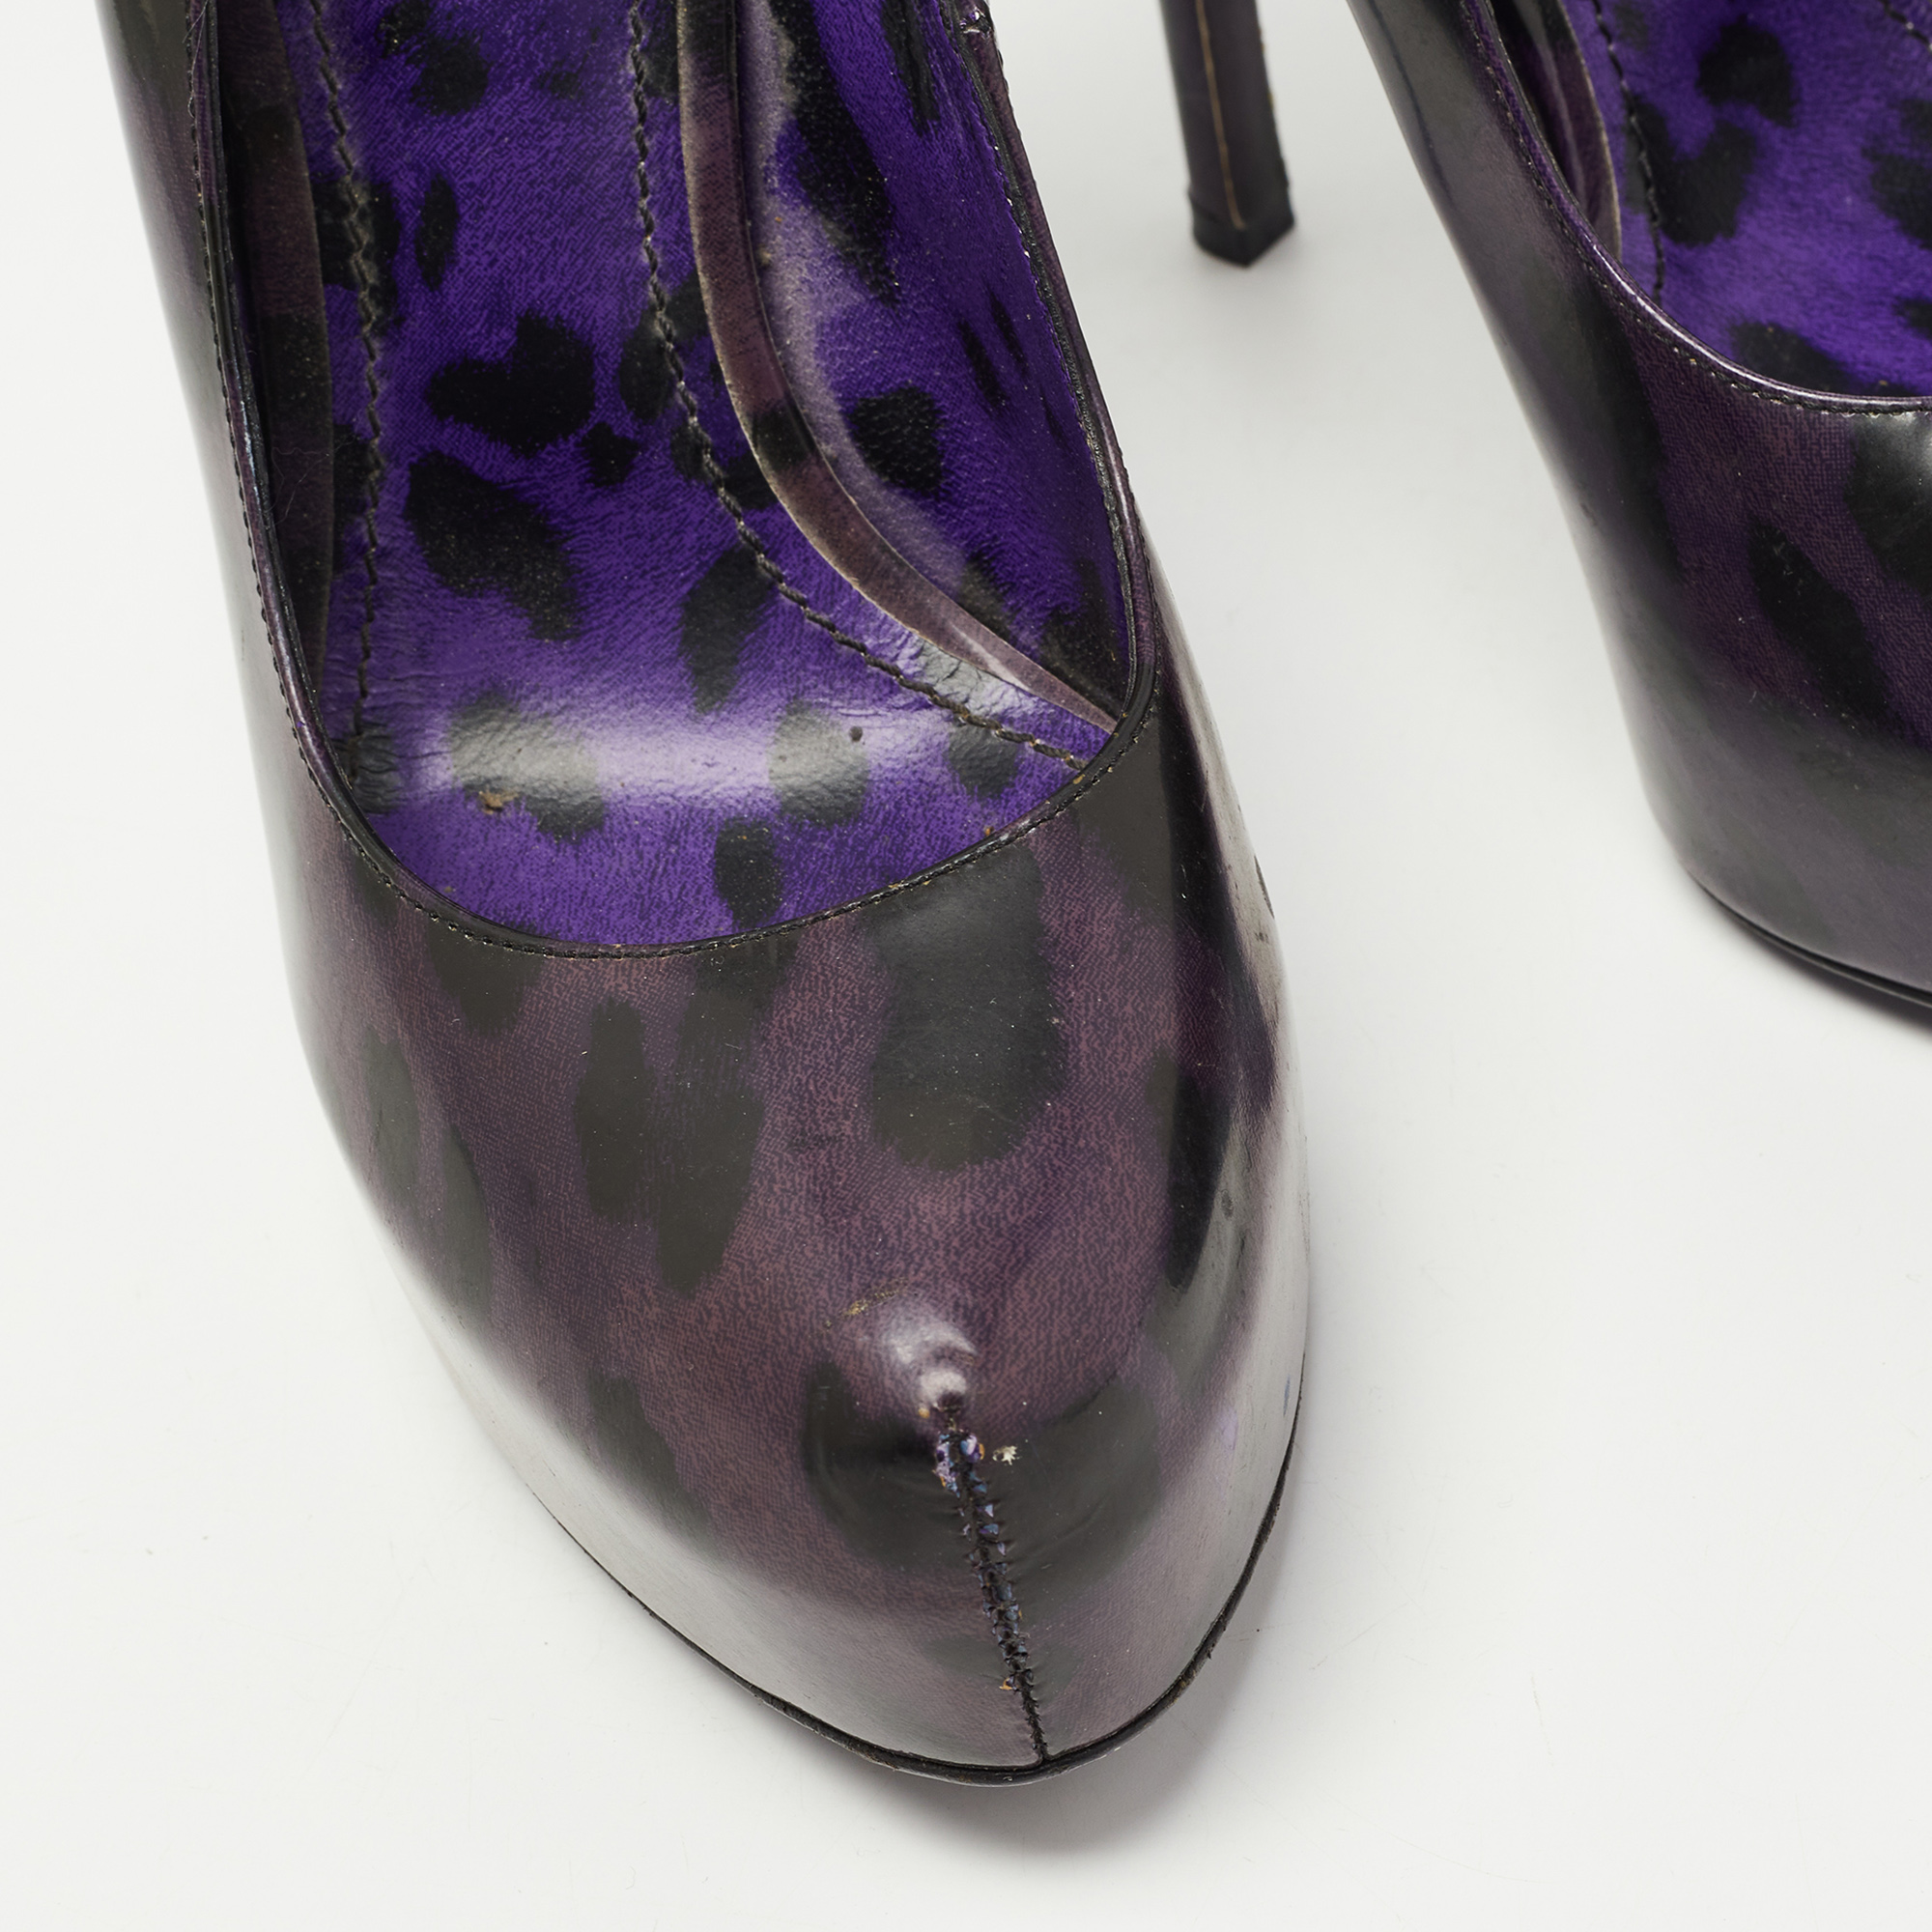 Dolce & Gabbana Purple/Black Patent Leather Platform Pumps Size 39